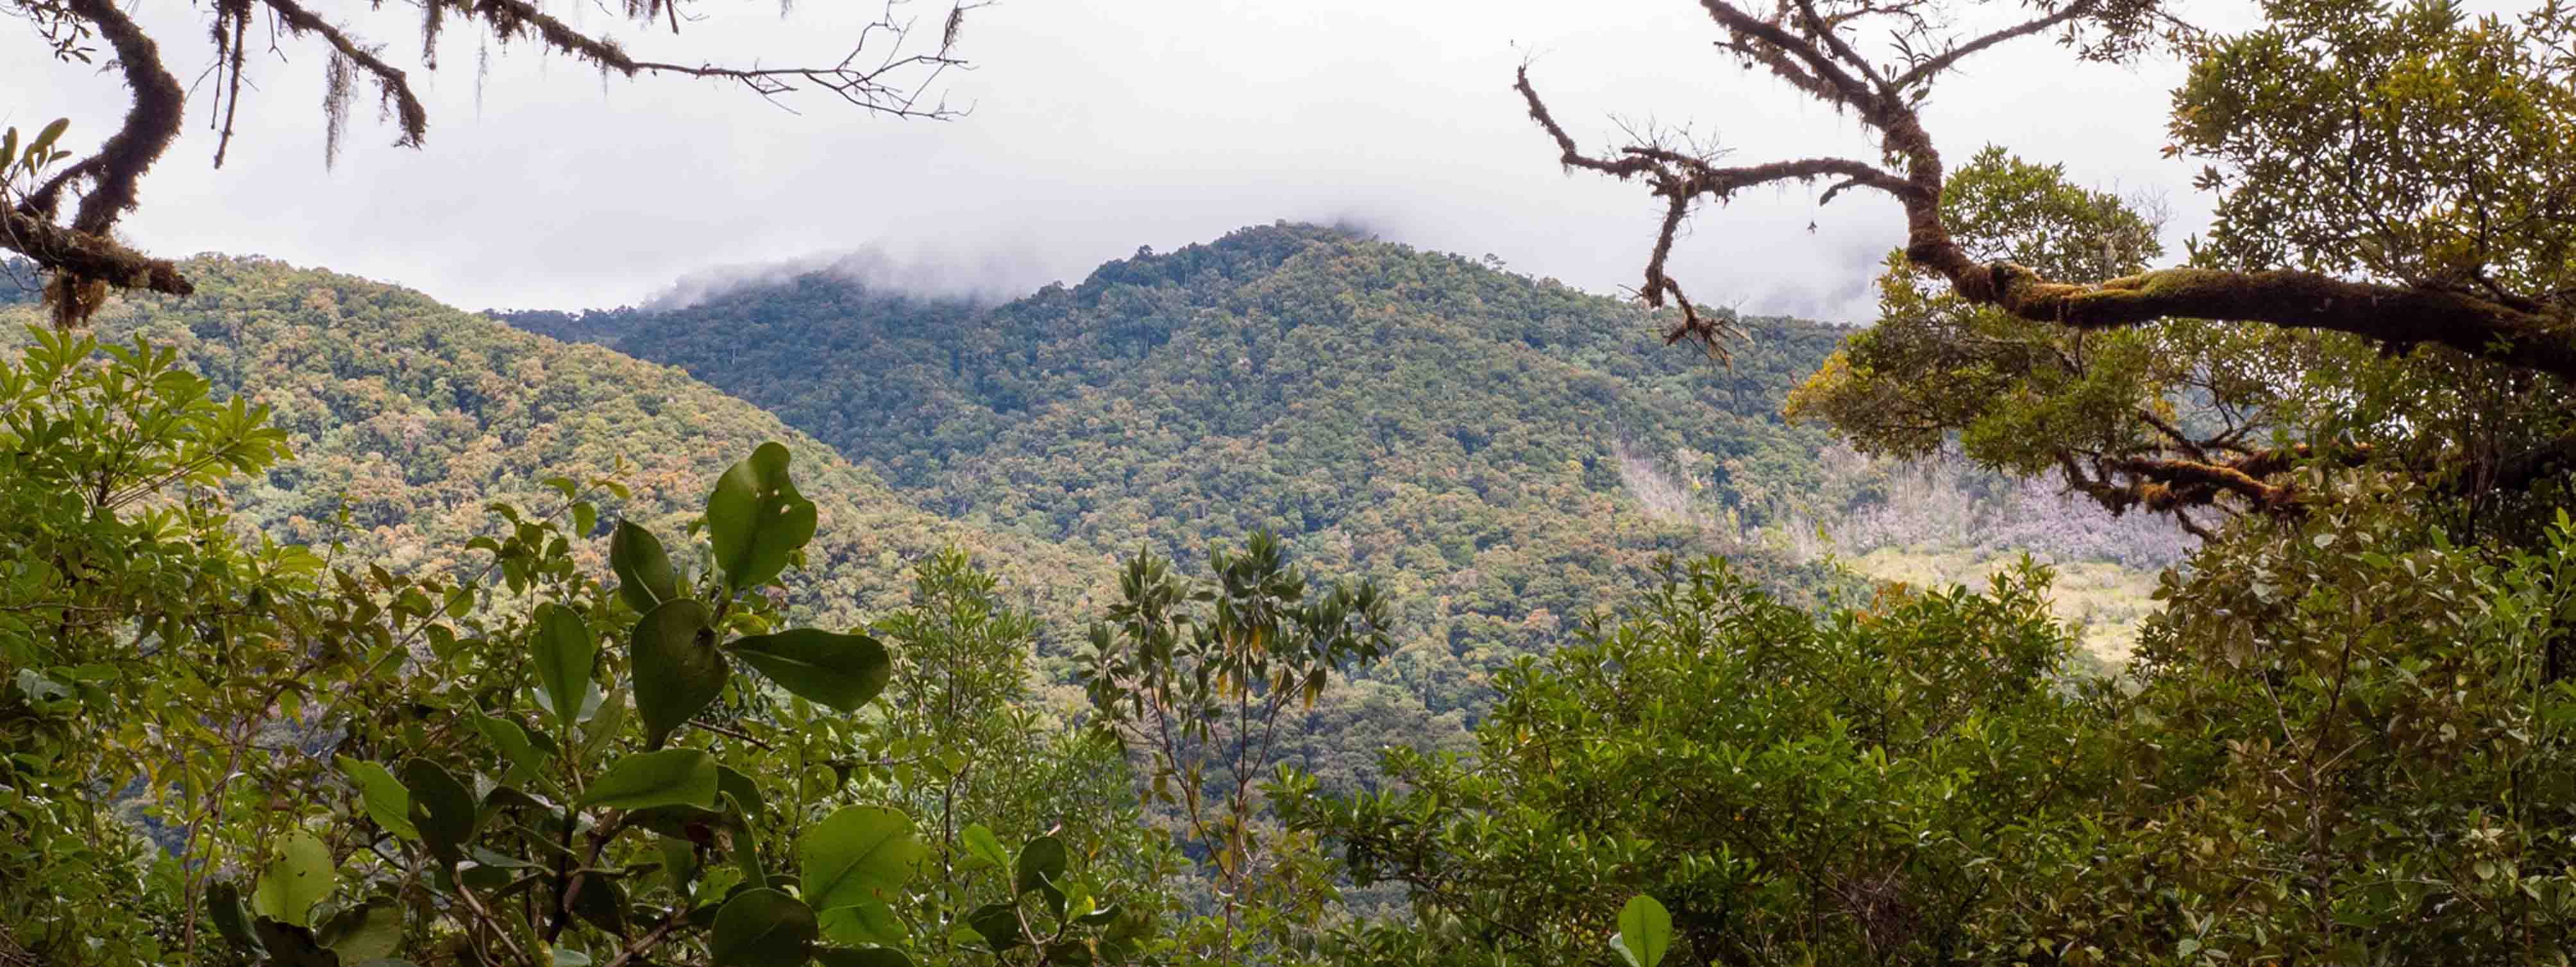 Cerro de la muerte Costa Rica